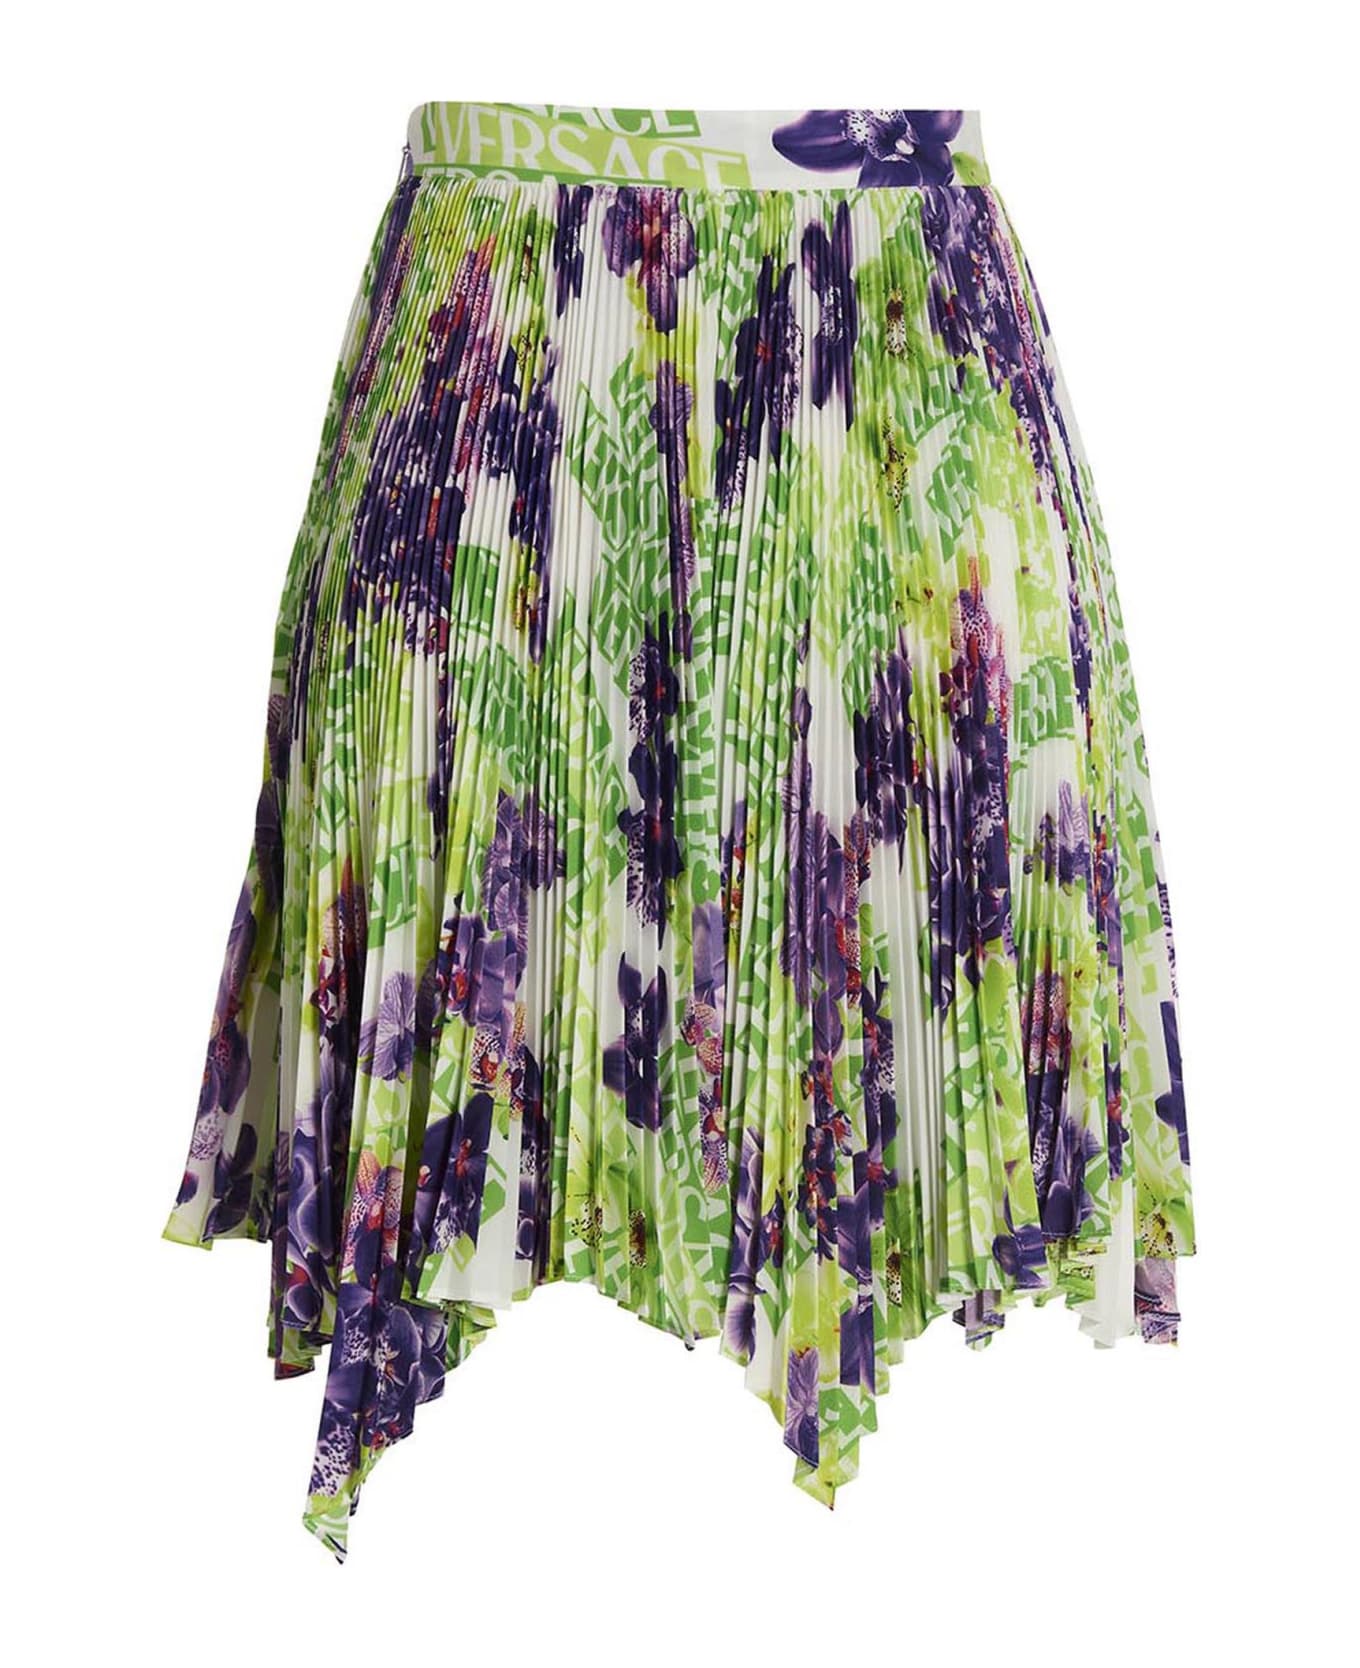 Versace 'versace' Skirt - Multicolor